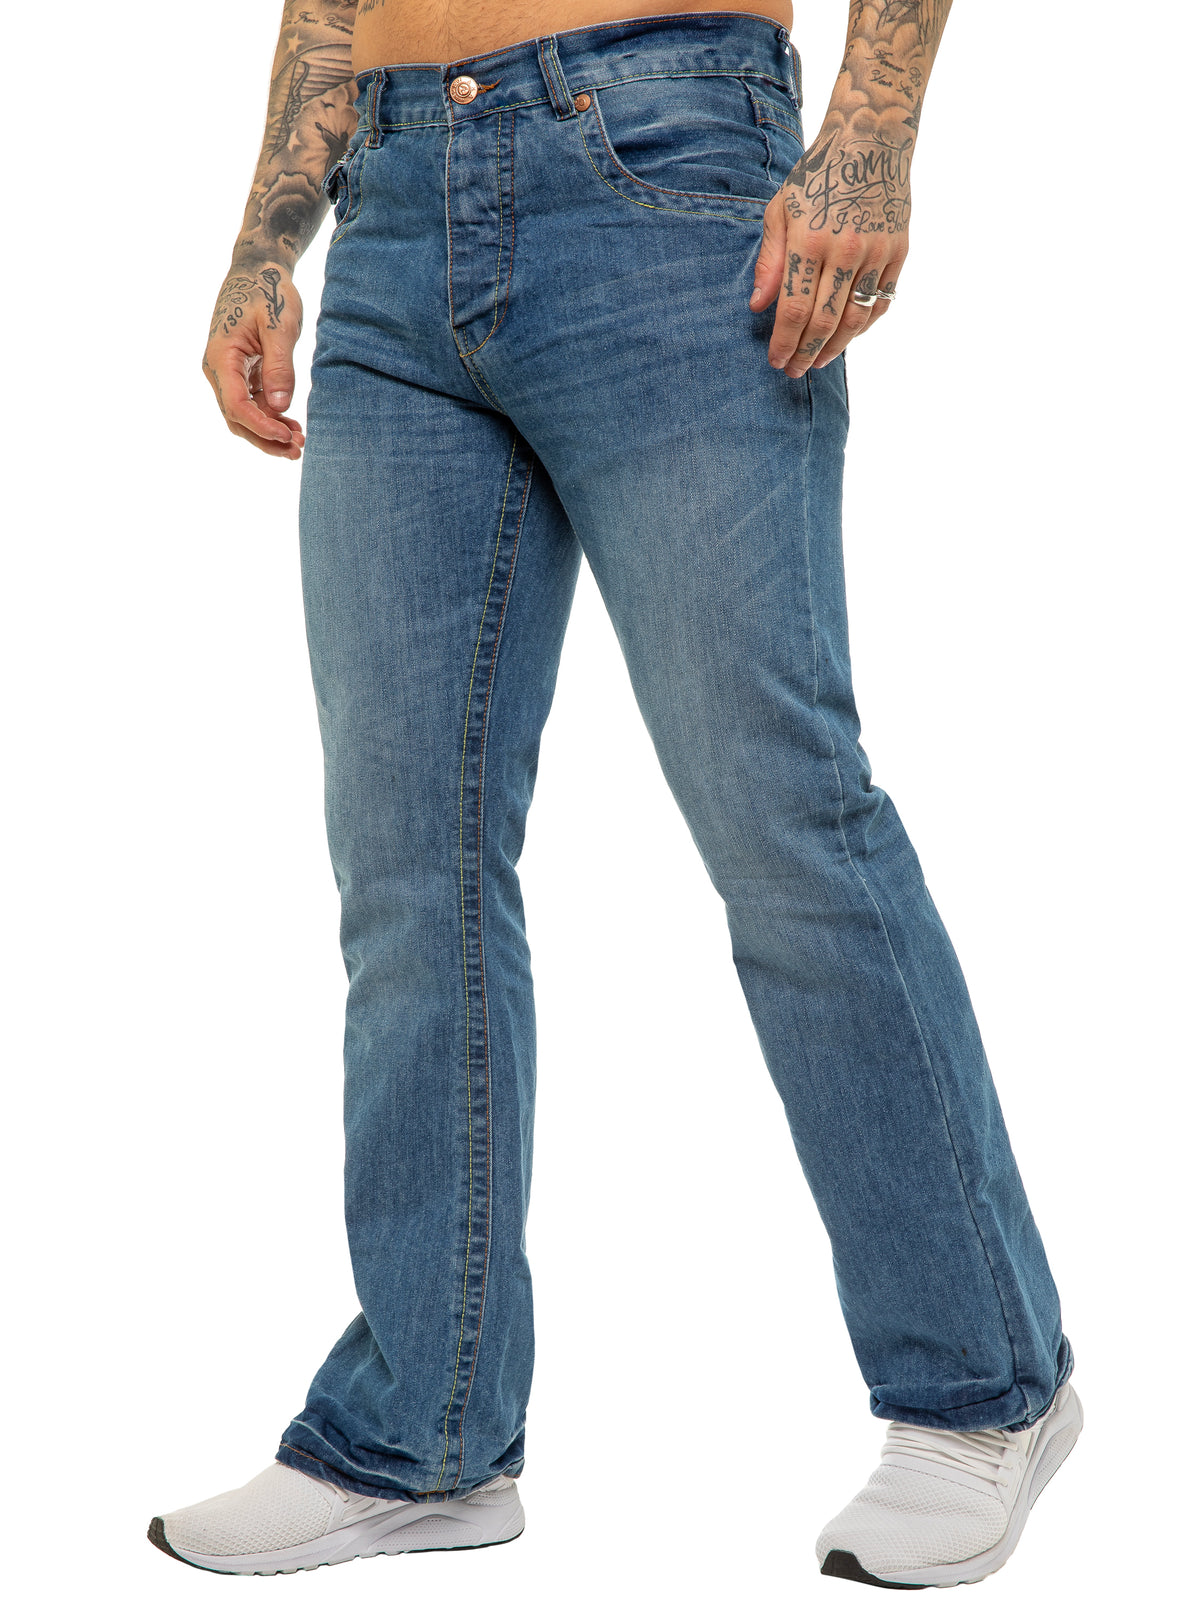 Kruze Denim Bootcut Jeans Mens Wide Leg Flare Pants Belted Trouser